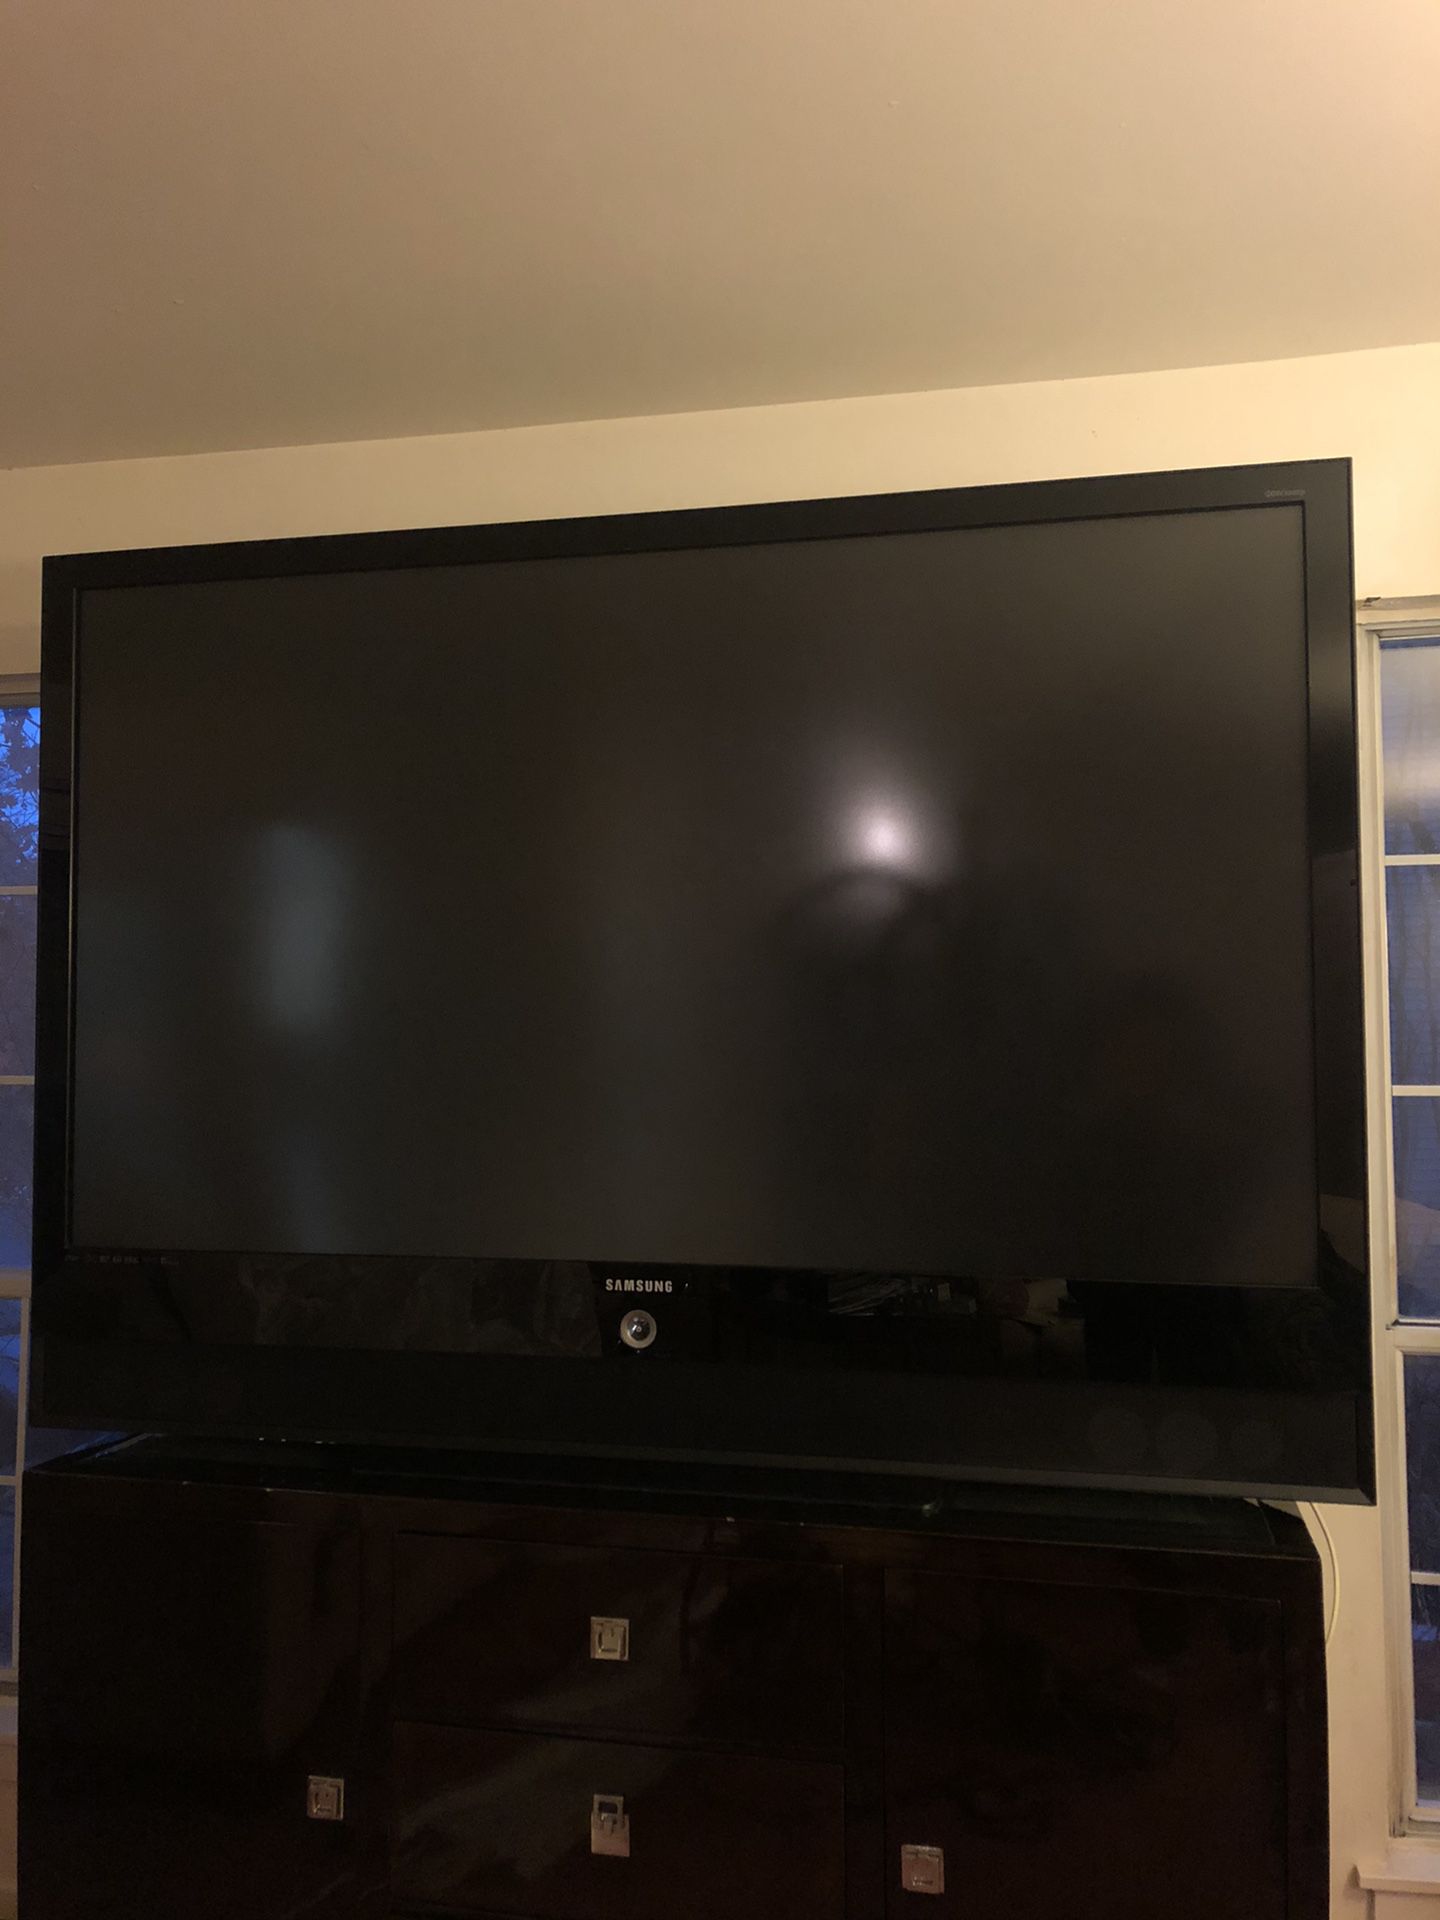 70 inch massive flatscreen TV